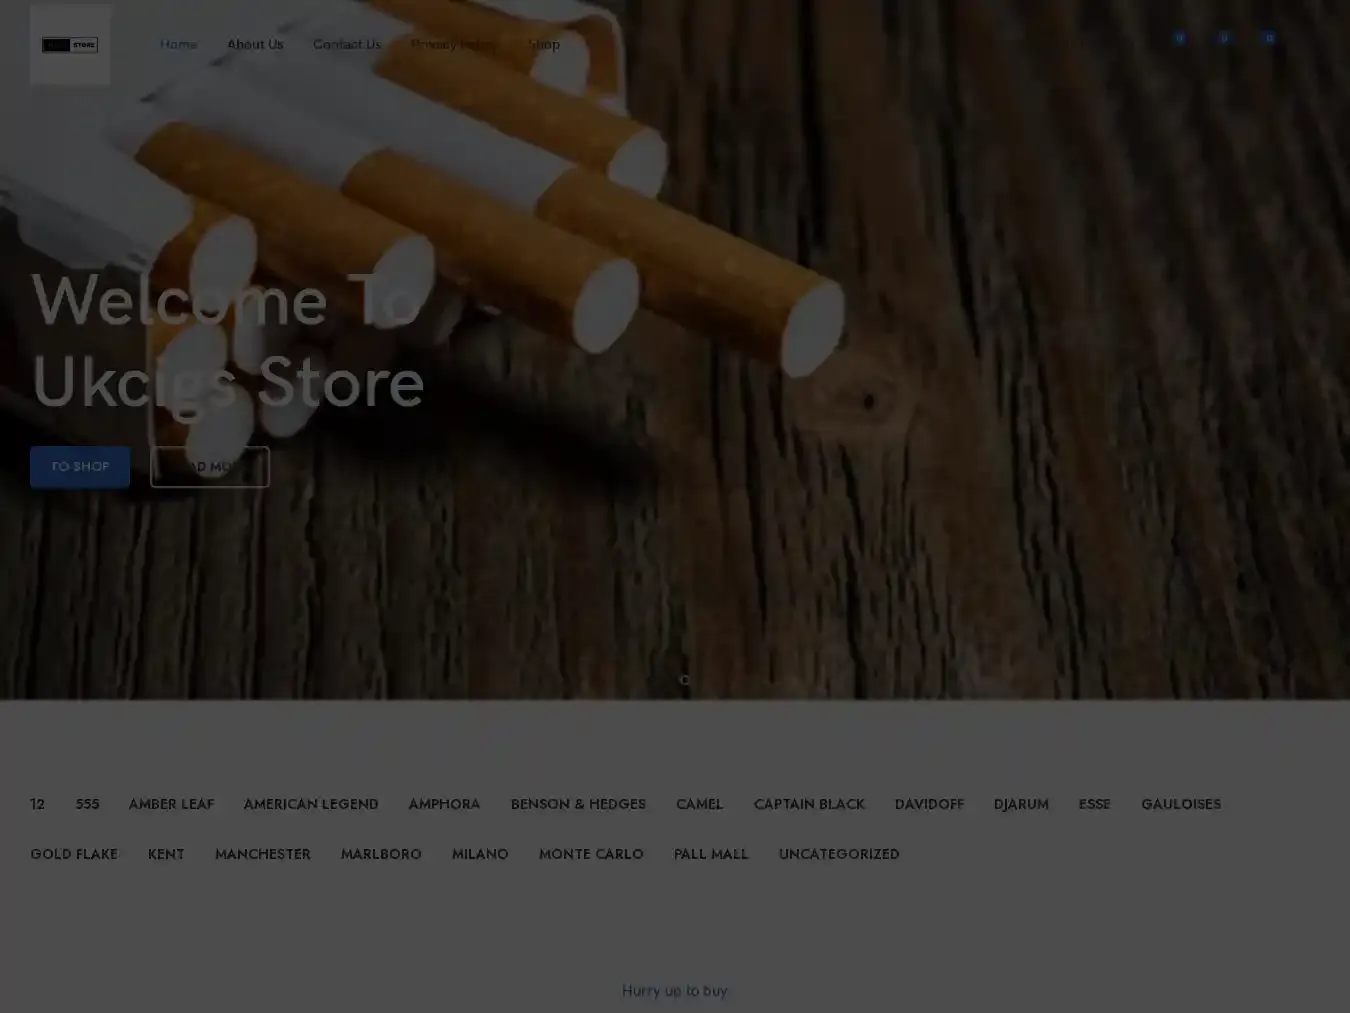 Buyeuropecigarettes.com Fraudulent Non-Delivery website.